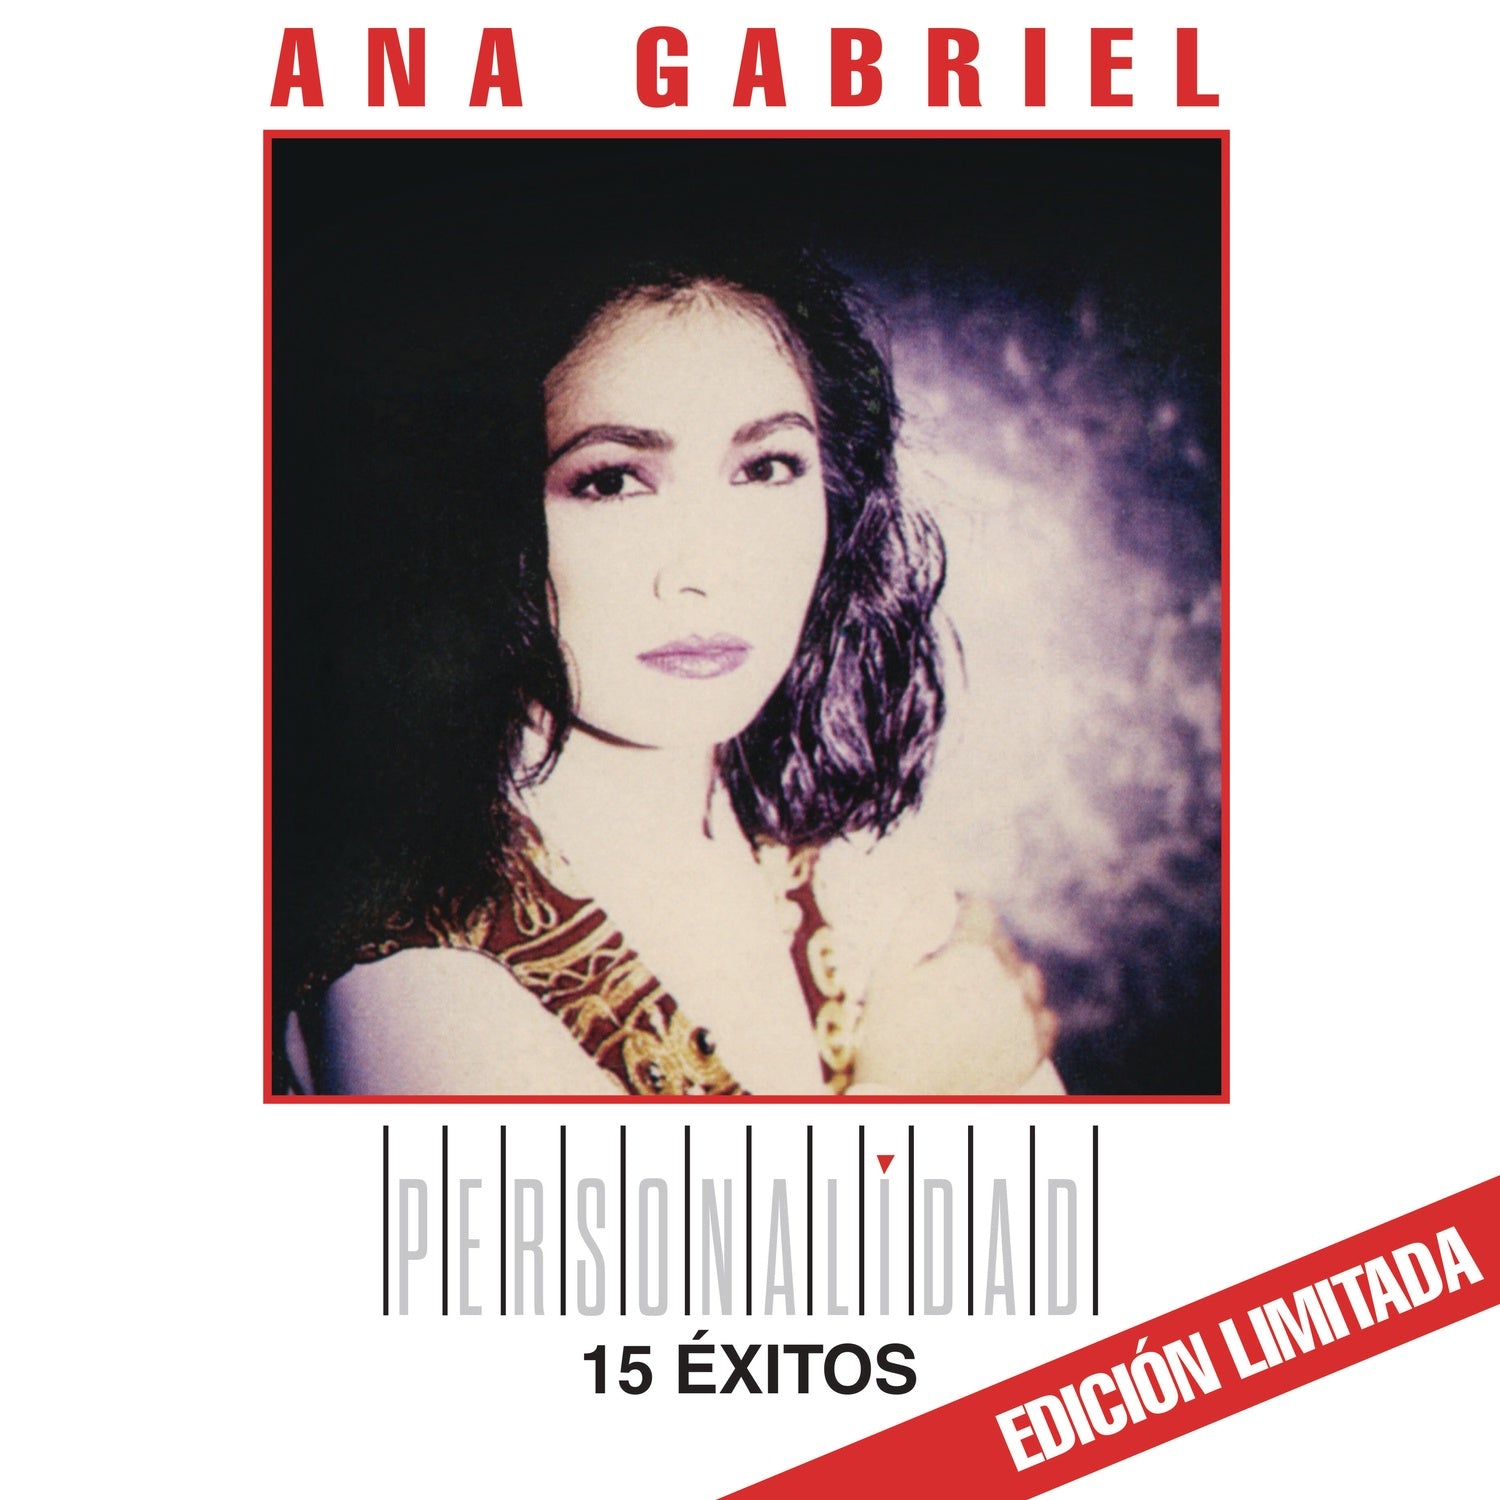 Ana Gabriel - Personalidad (1993) - New LP Record 2022 BMG Mexico Vinyl - Latin